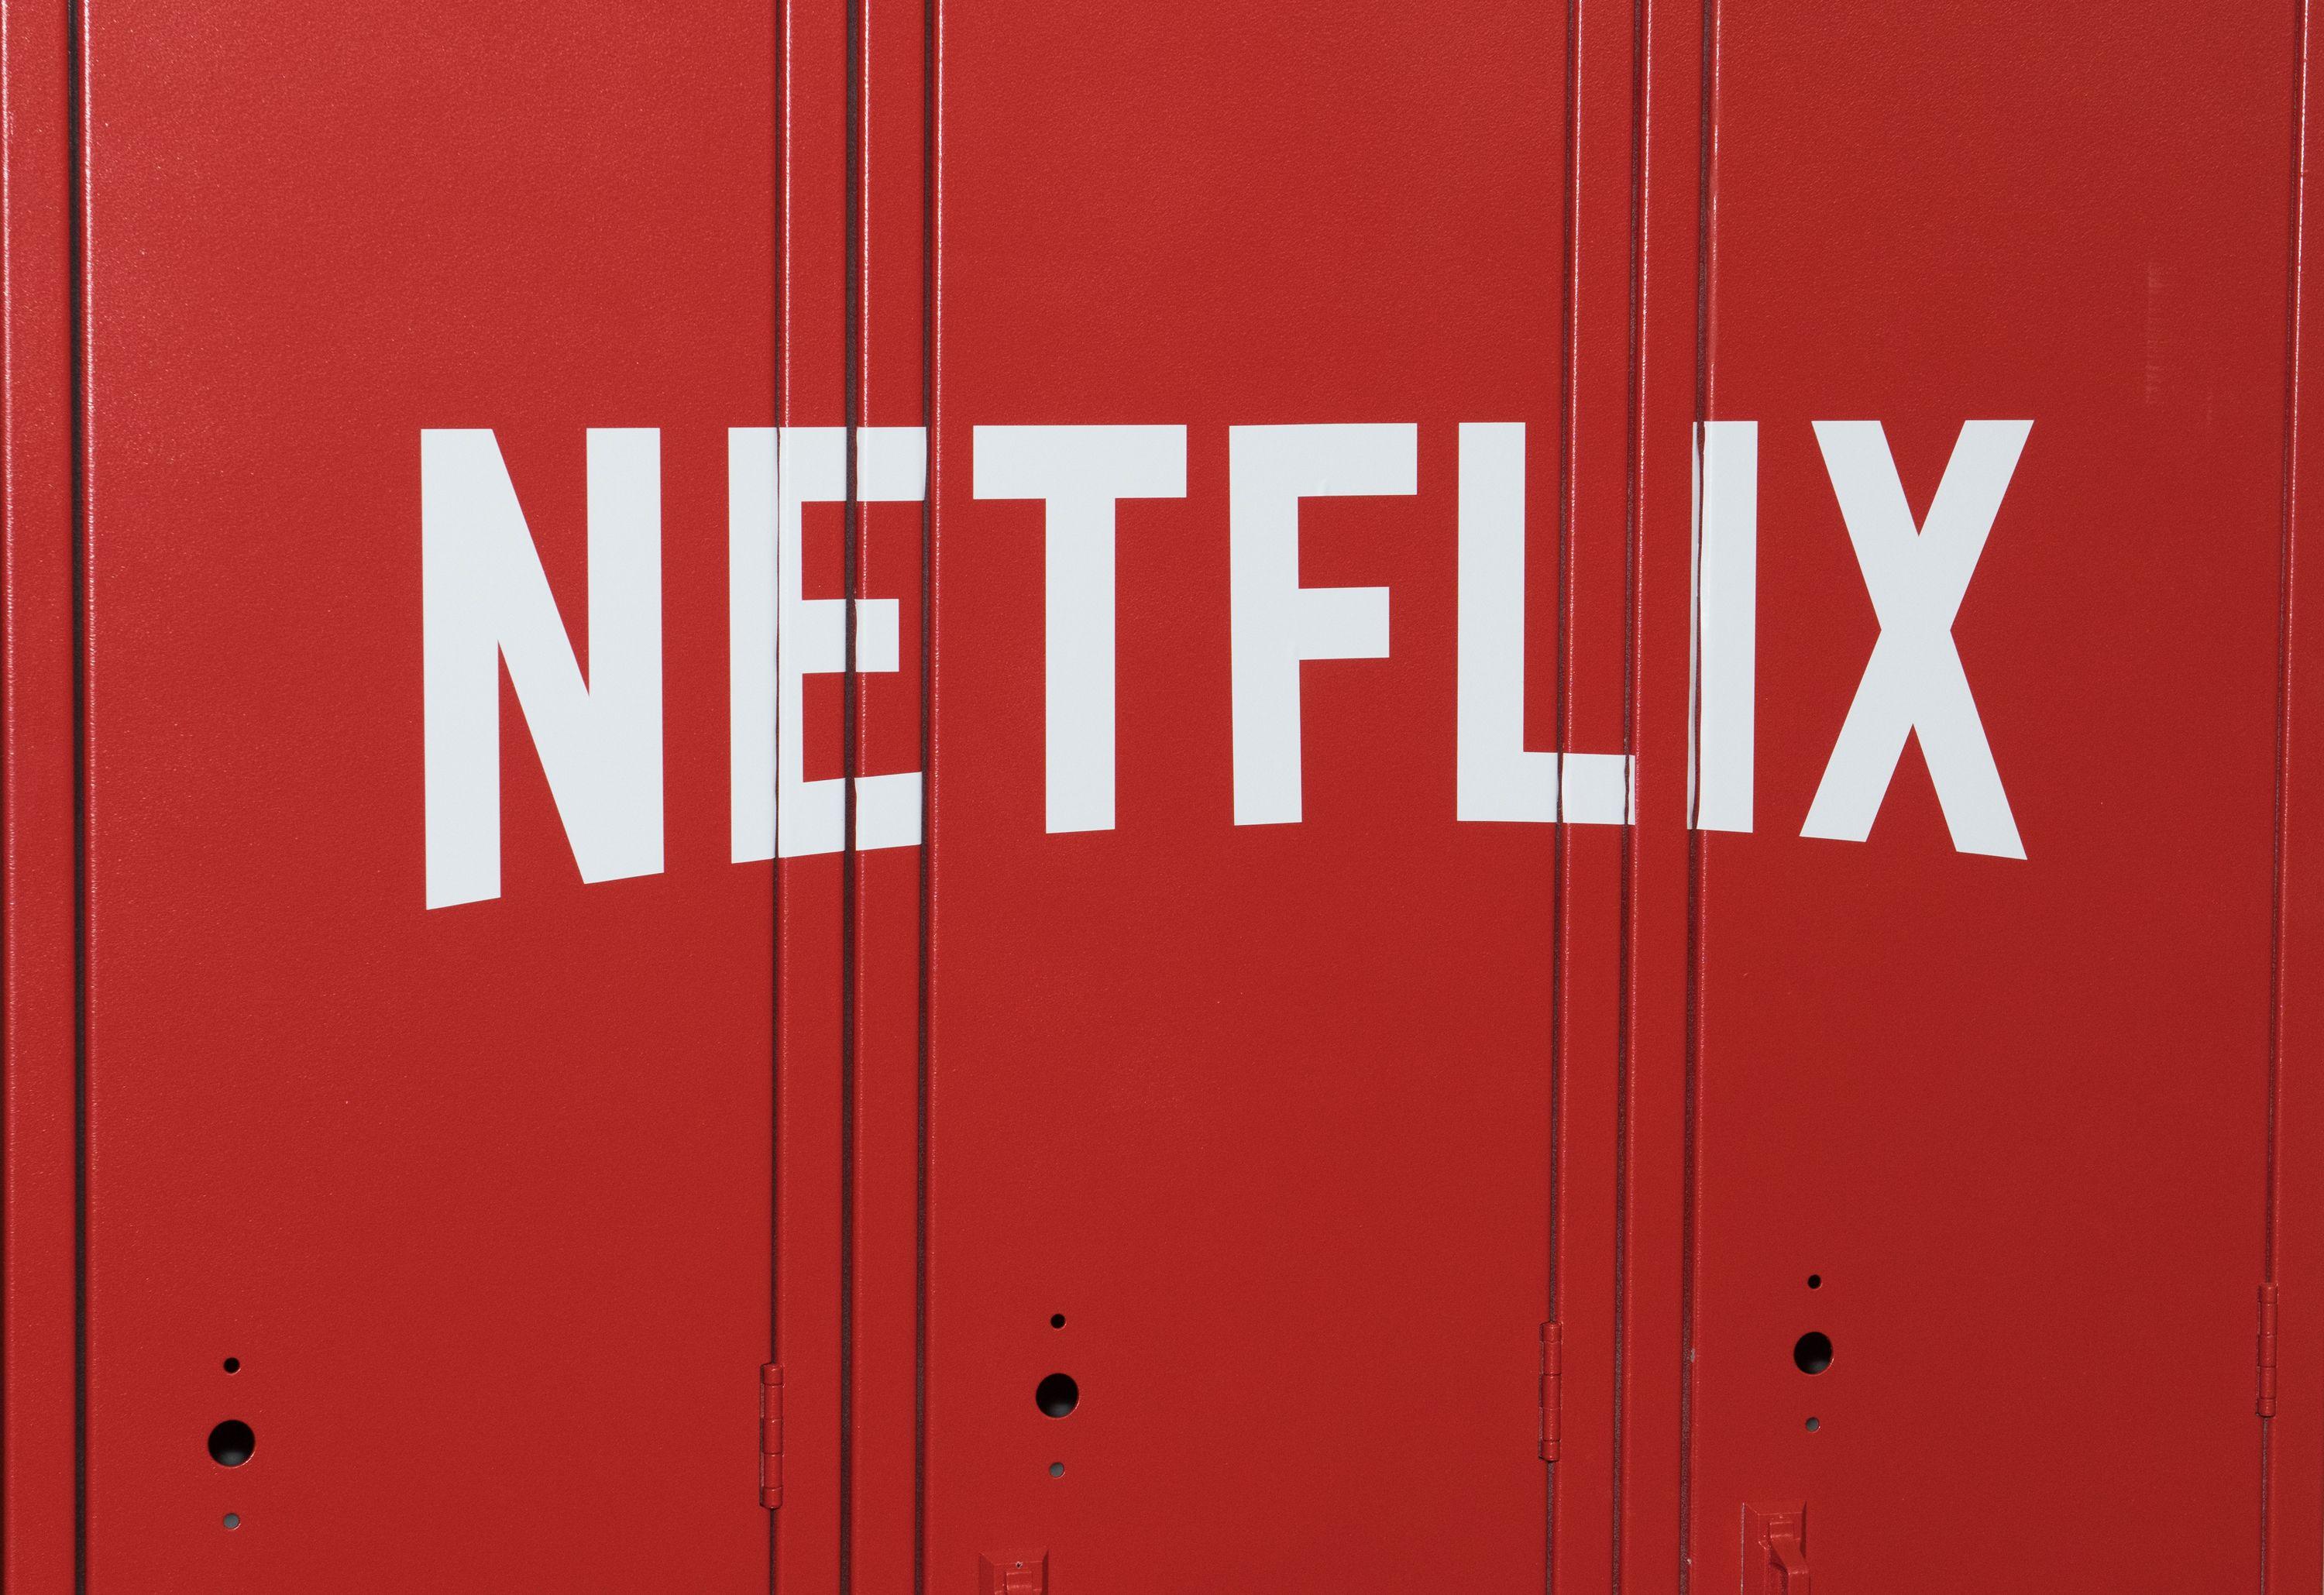 Netflicks Logo - Netflix Earnings: Why It Gathers Customer Data But Does Not Share It ...